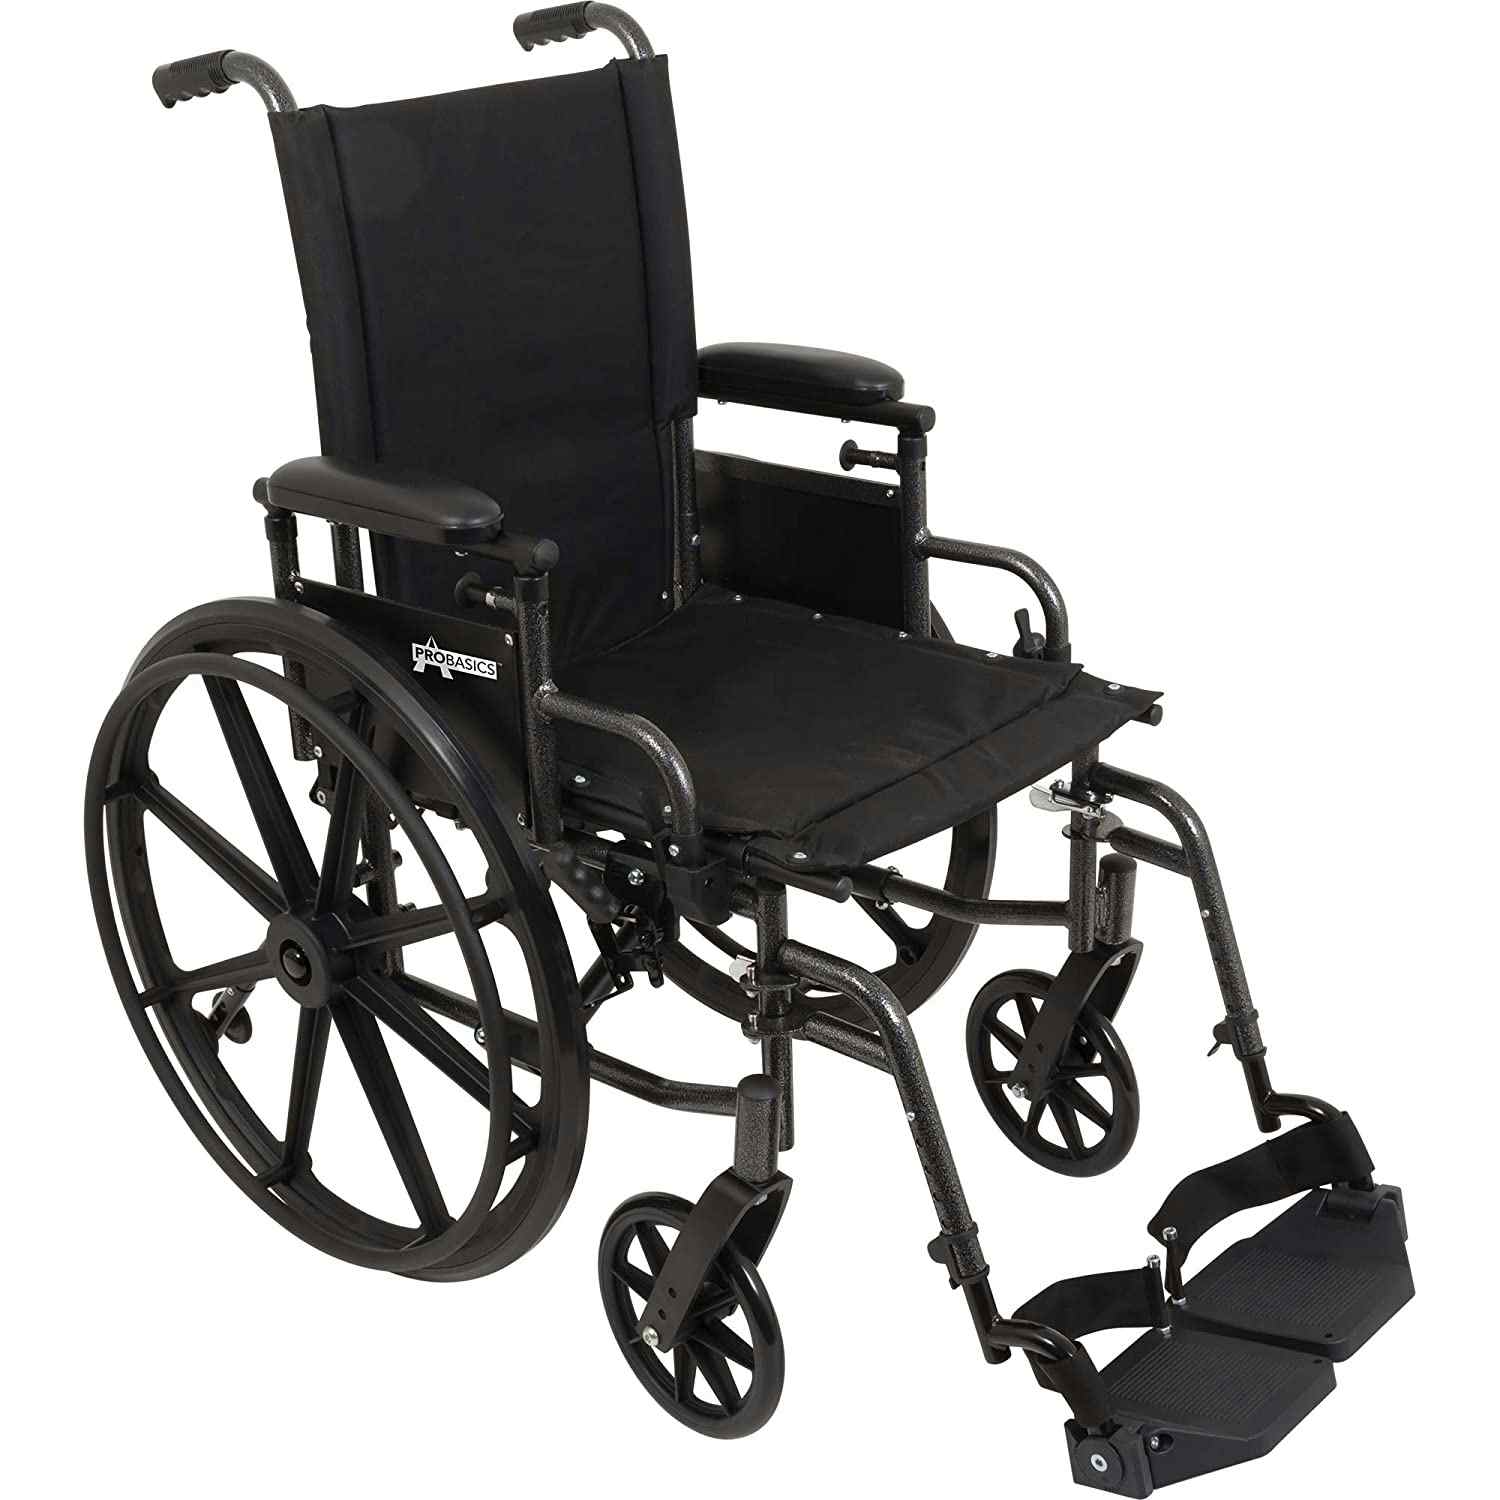 ProBasics K4 High Strength Wheelchair, Lightweight, Flip-back Padded Armrests, Swing-Away Footrests